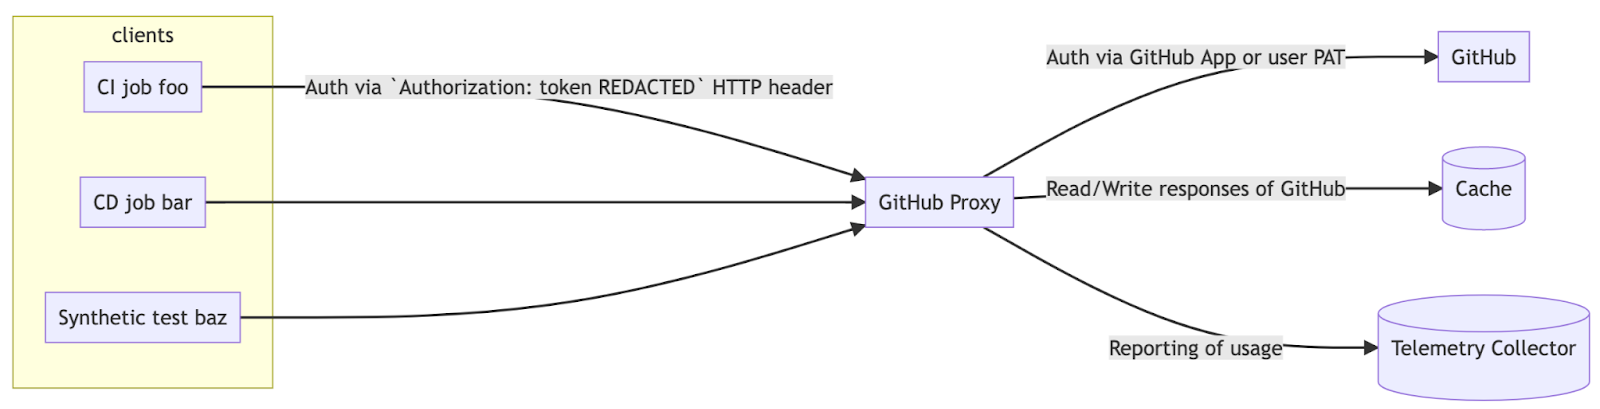 GitHub-Proxy architecture diagram